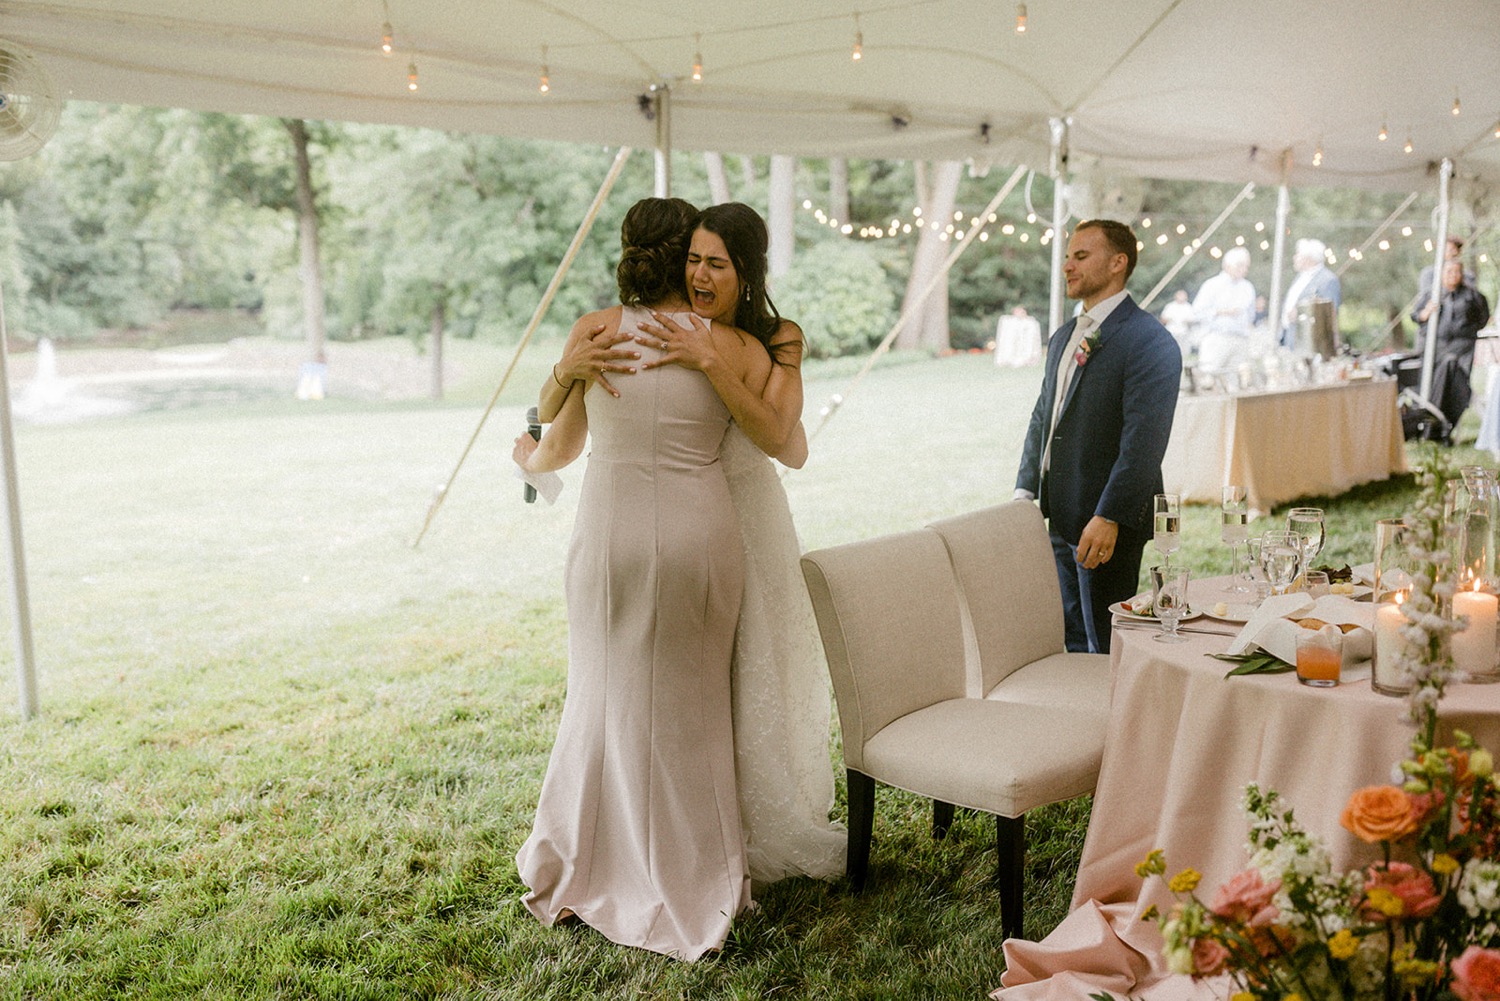 bride hugging bridesmaid crying after wedding toast speech